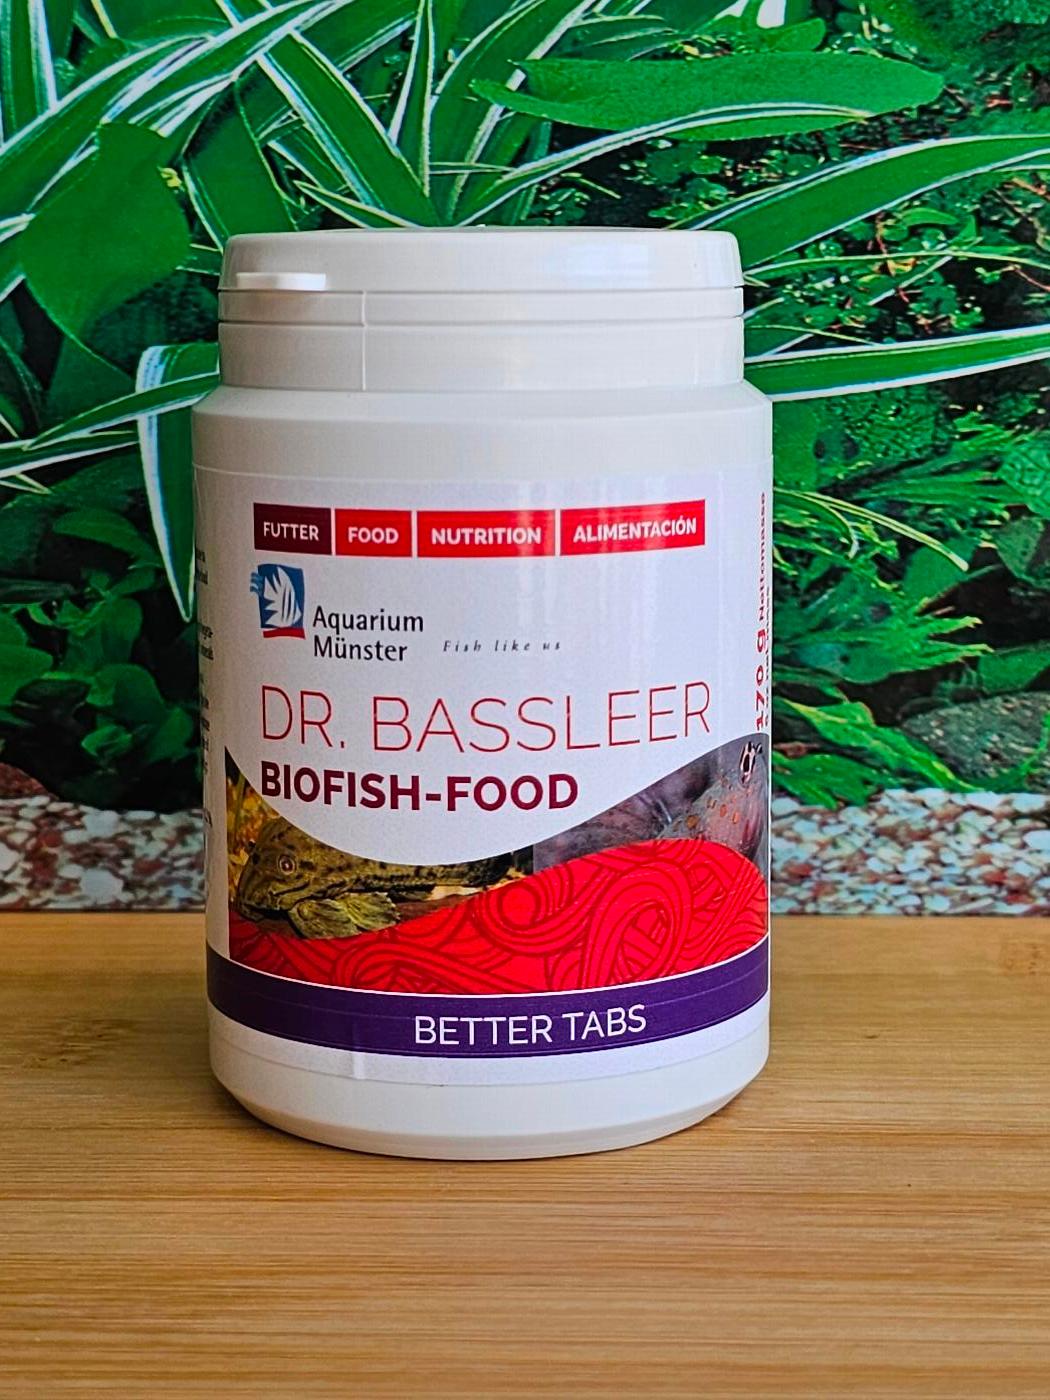 Dr. Bassleer Biofish-Food BETTER TABS